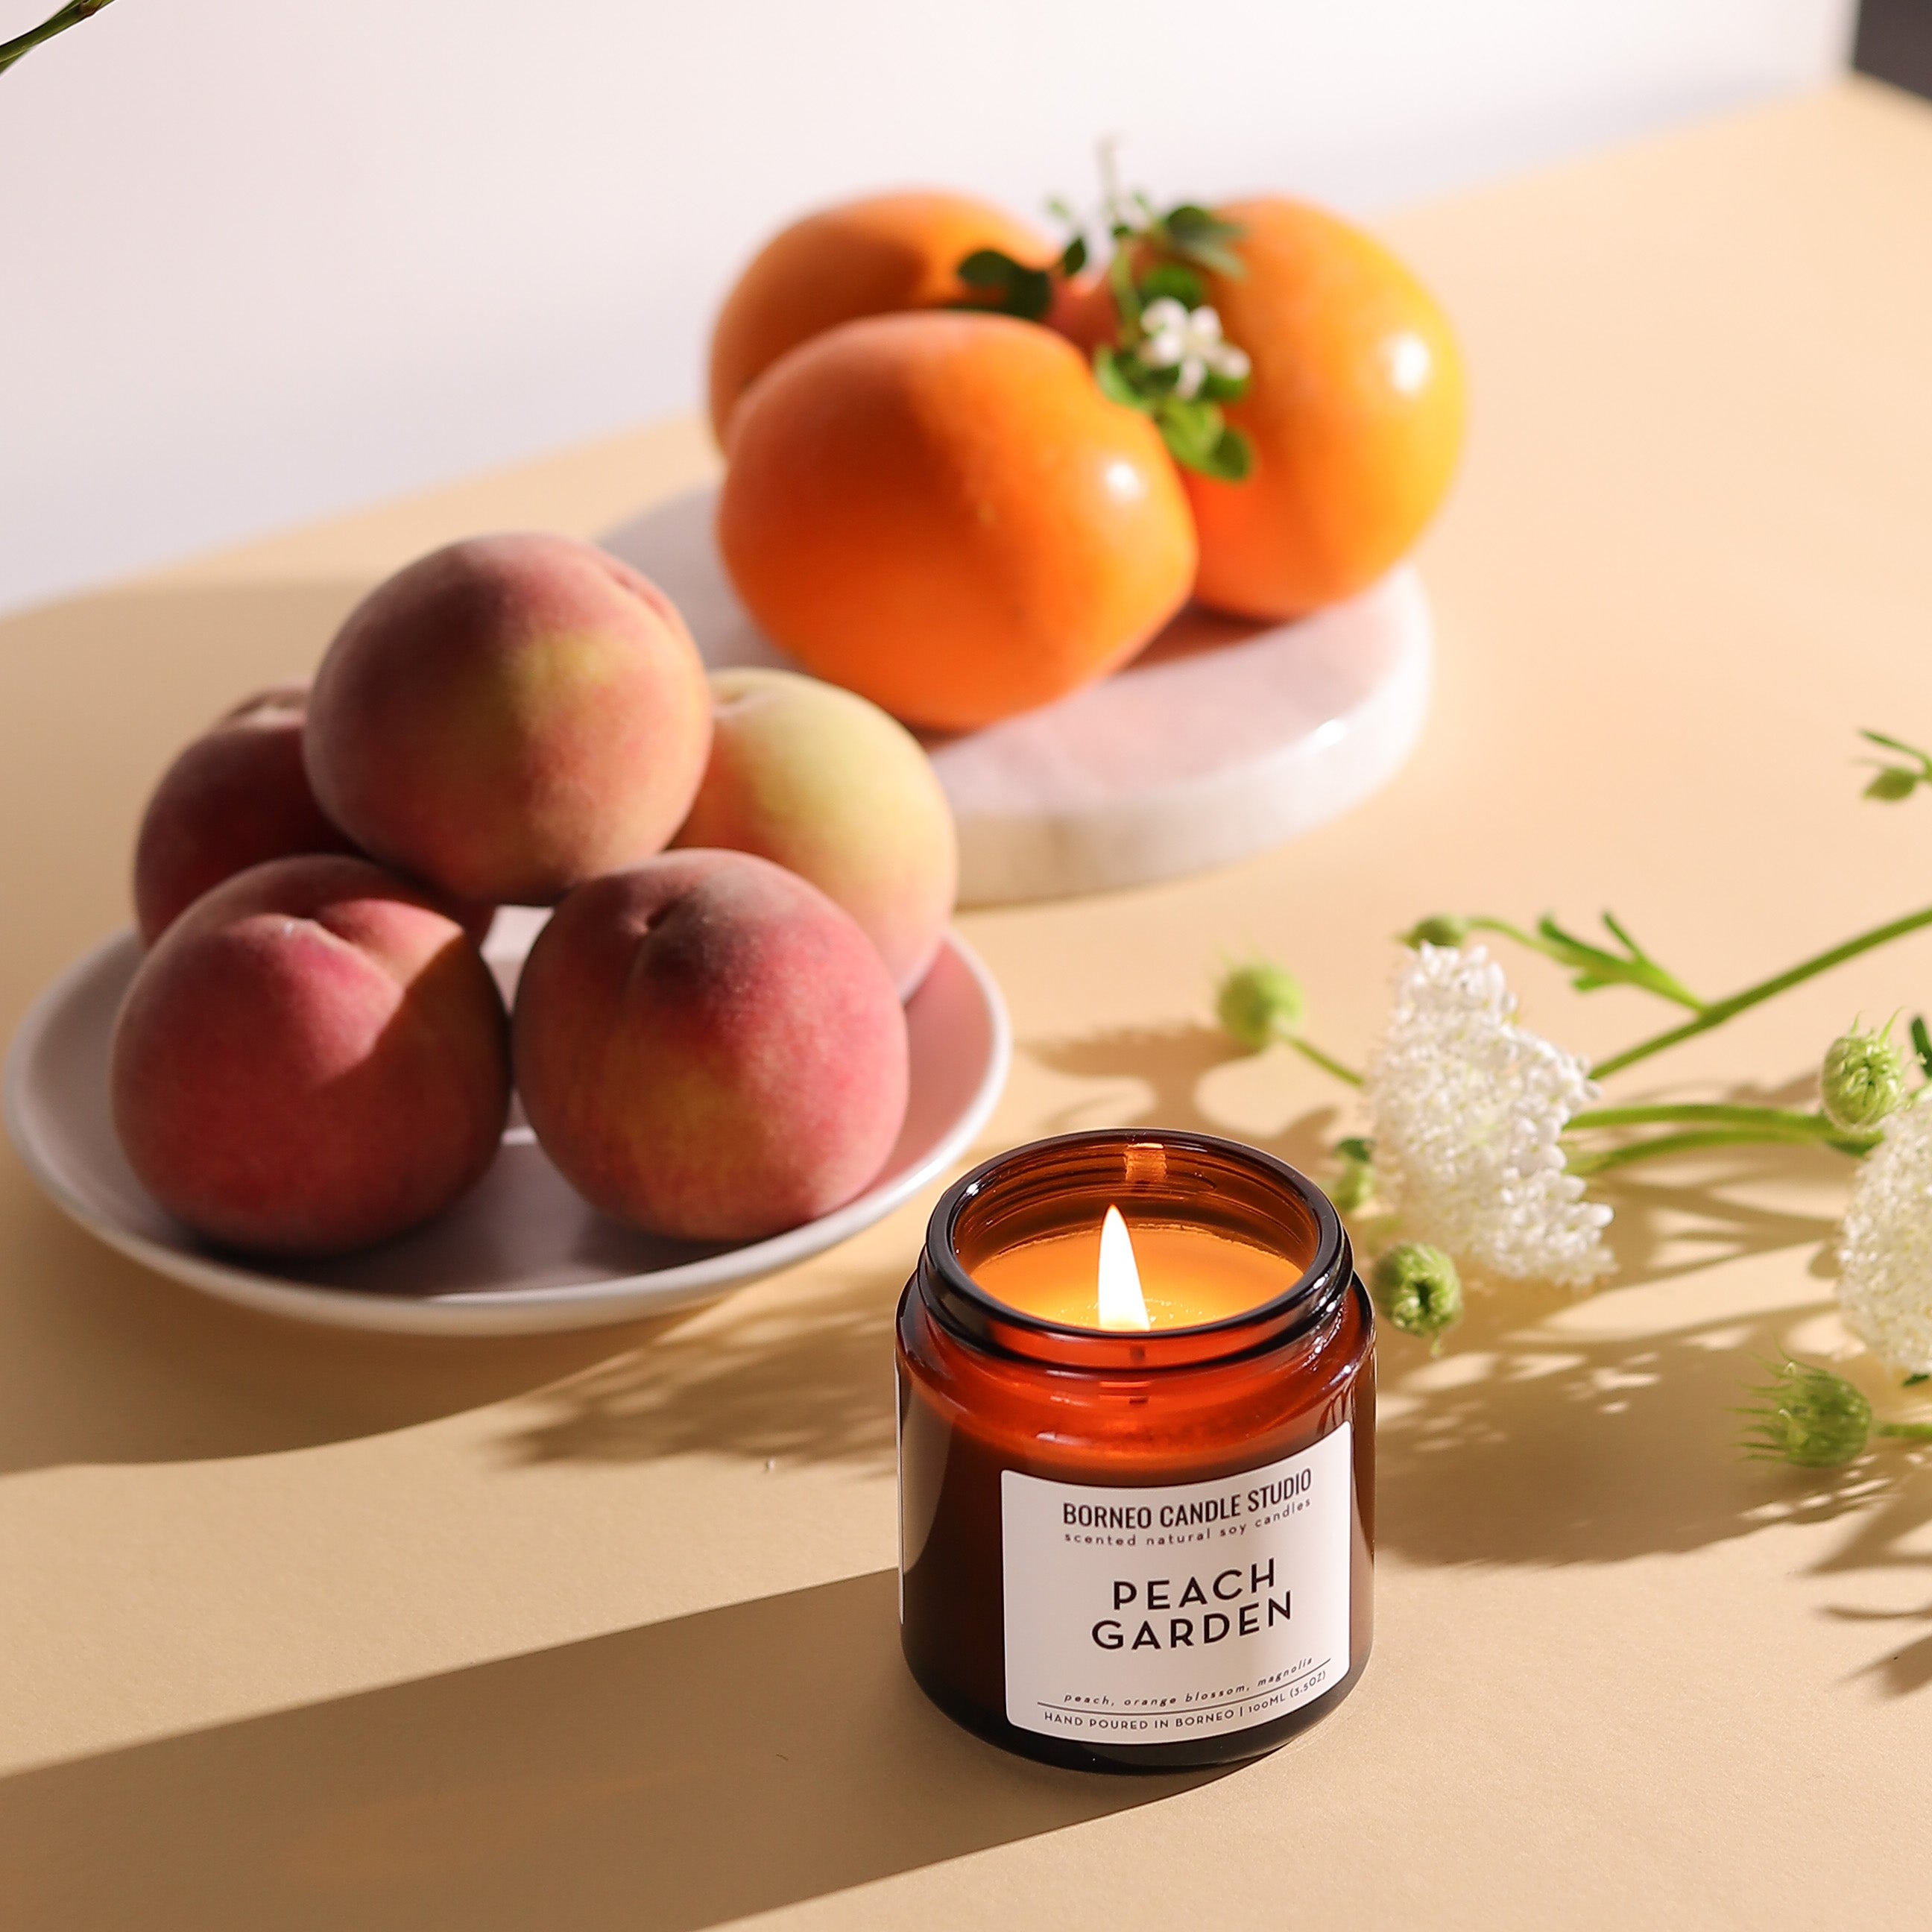 Peach Garden Scented Candle - fragrance notes of peach, orange blossom, magnolia